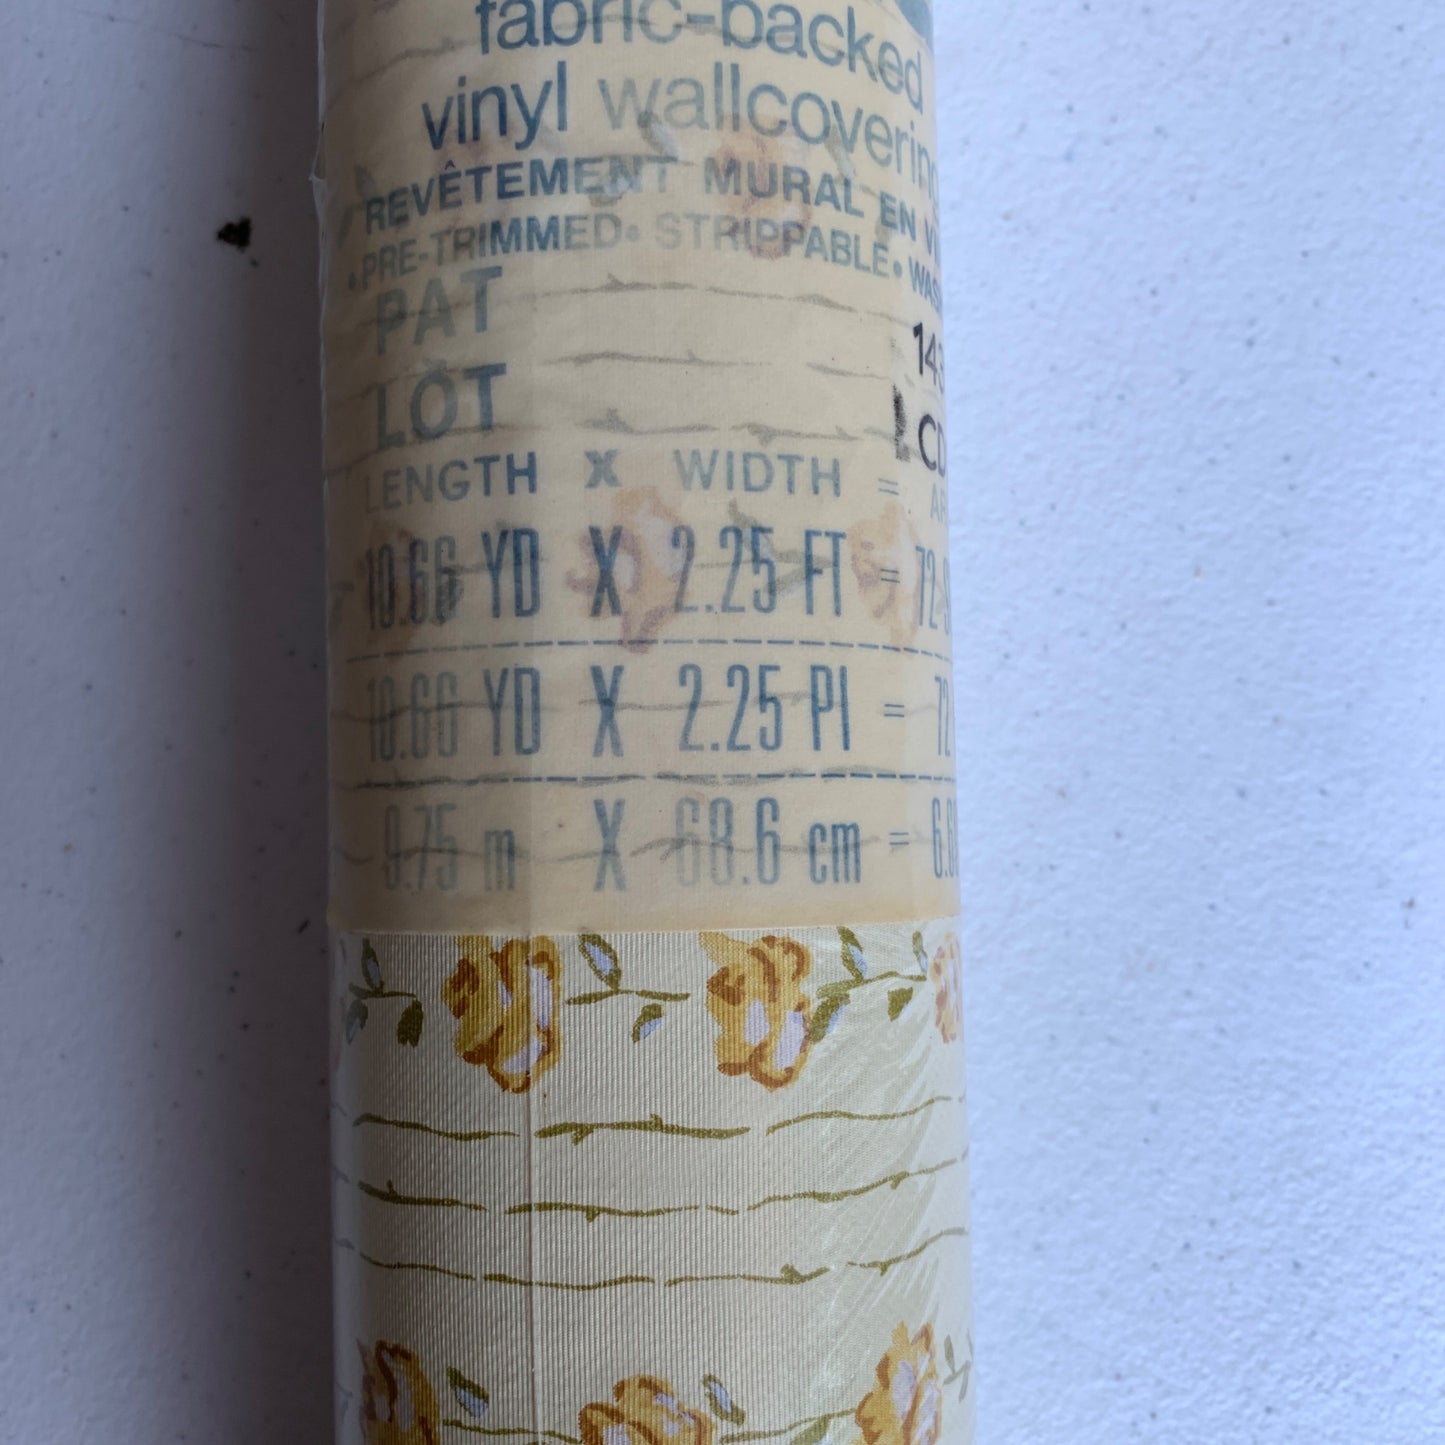 Borden Wall-Tex Fabric-Backed Vinyl Wallcovering Yellow Rose 72 SQ FT